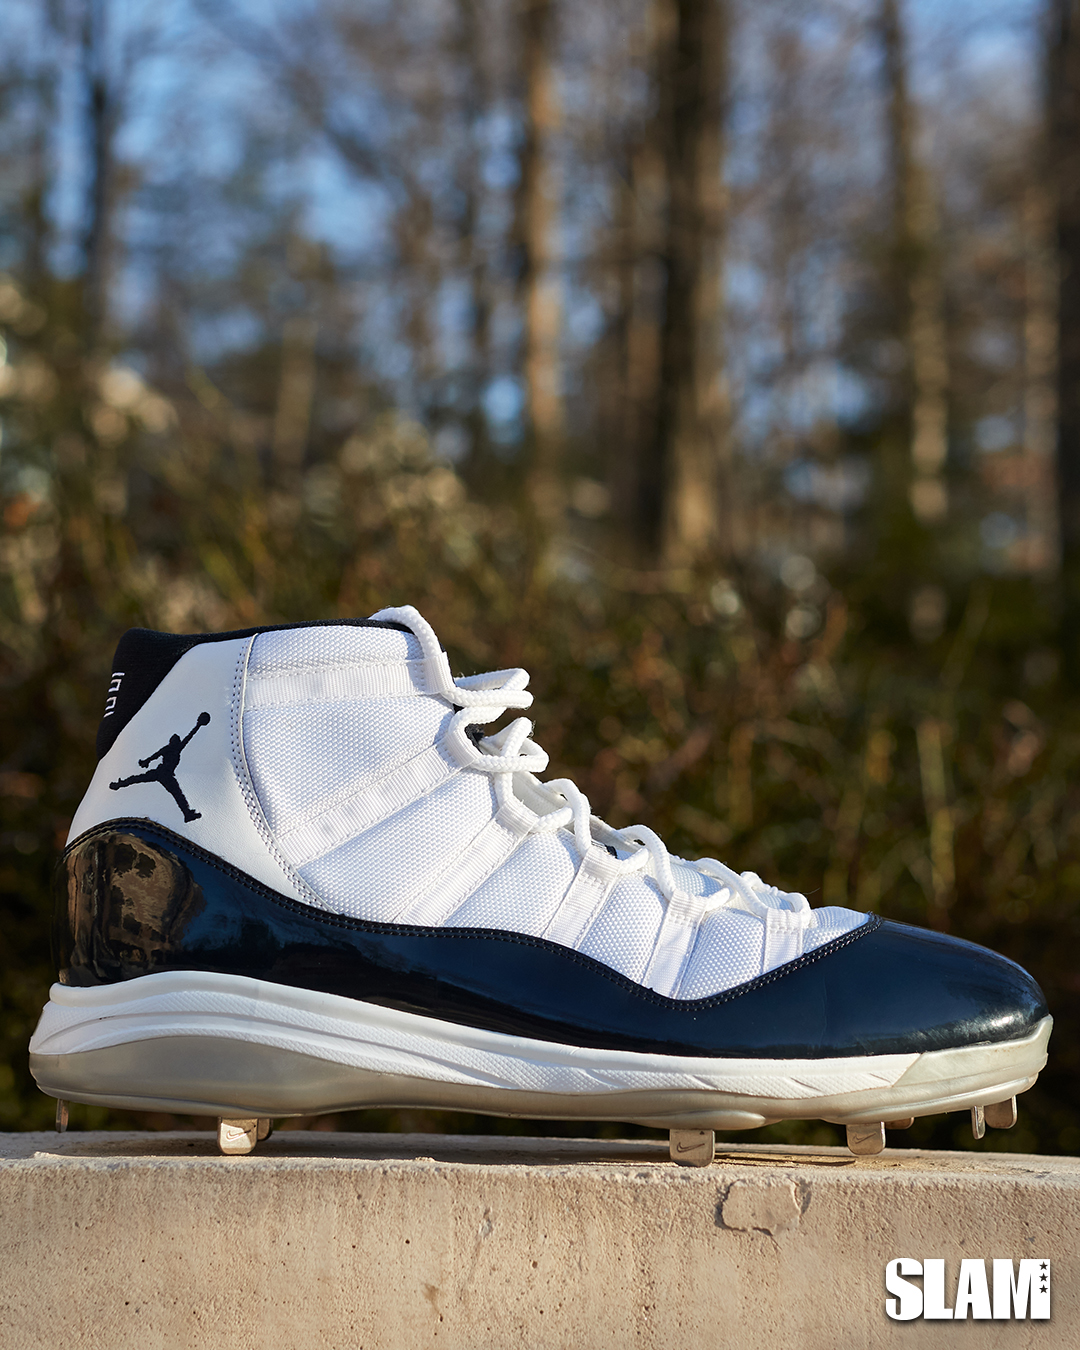 CC Sabathia Nike Air Jordan 11 Retro Promo Sample Baseball Cleats | Size 15